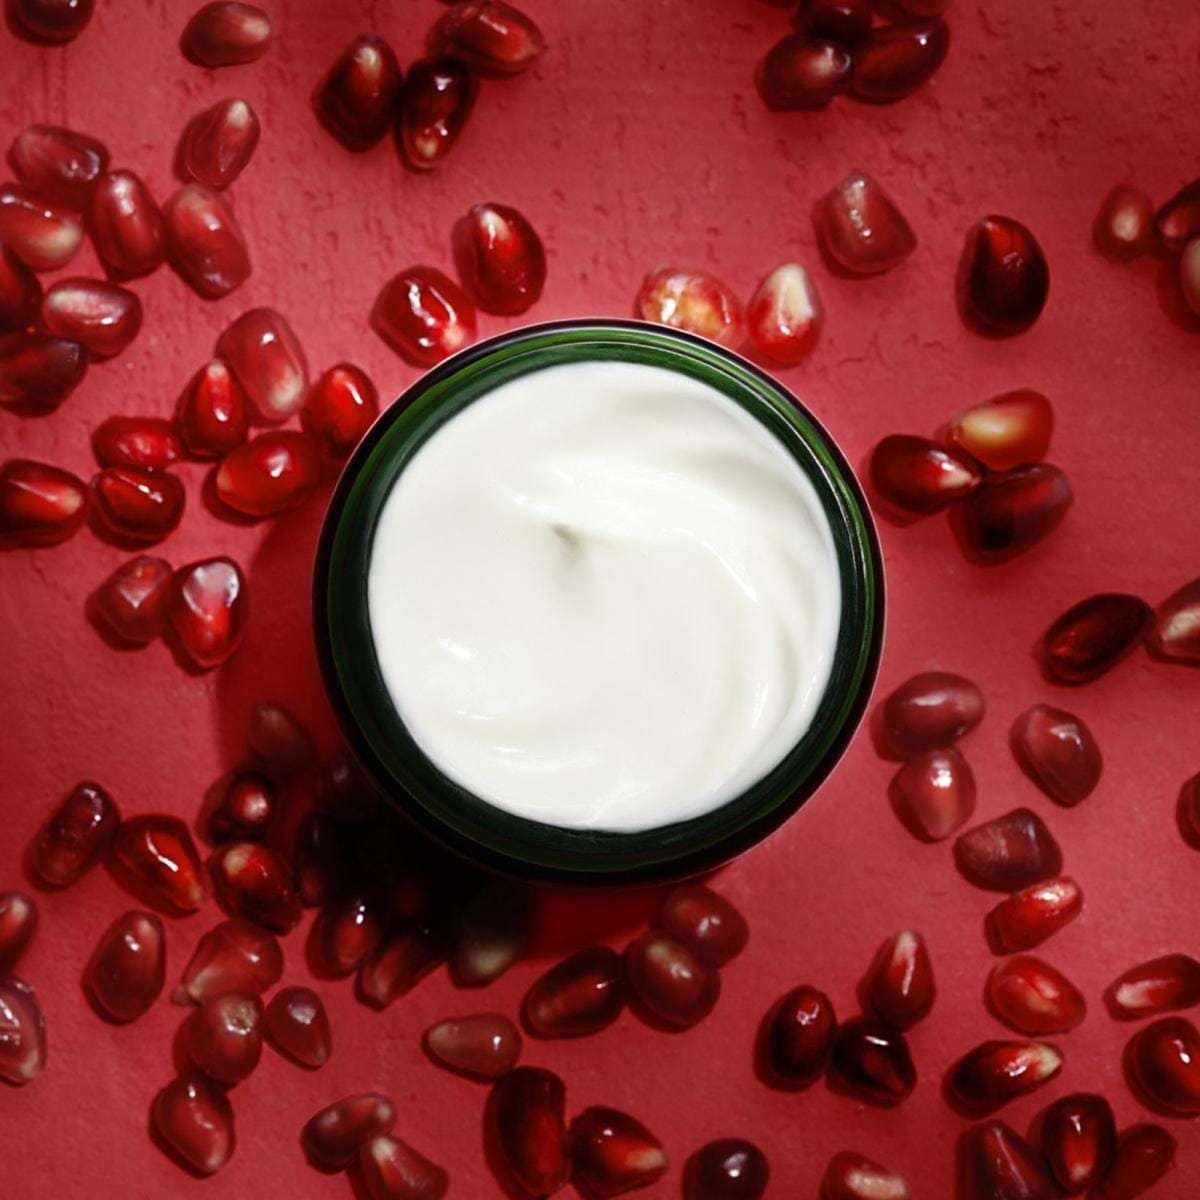 Weleda Firming Day Cream Pomegranate & Maca Peptides 40ml